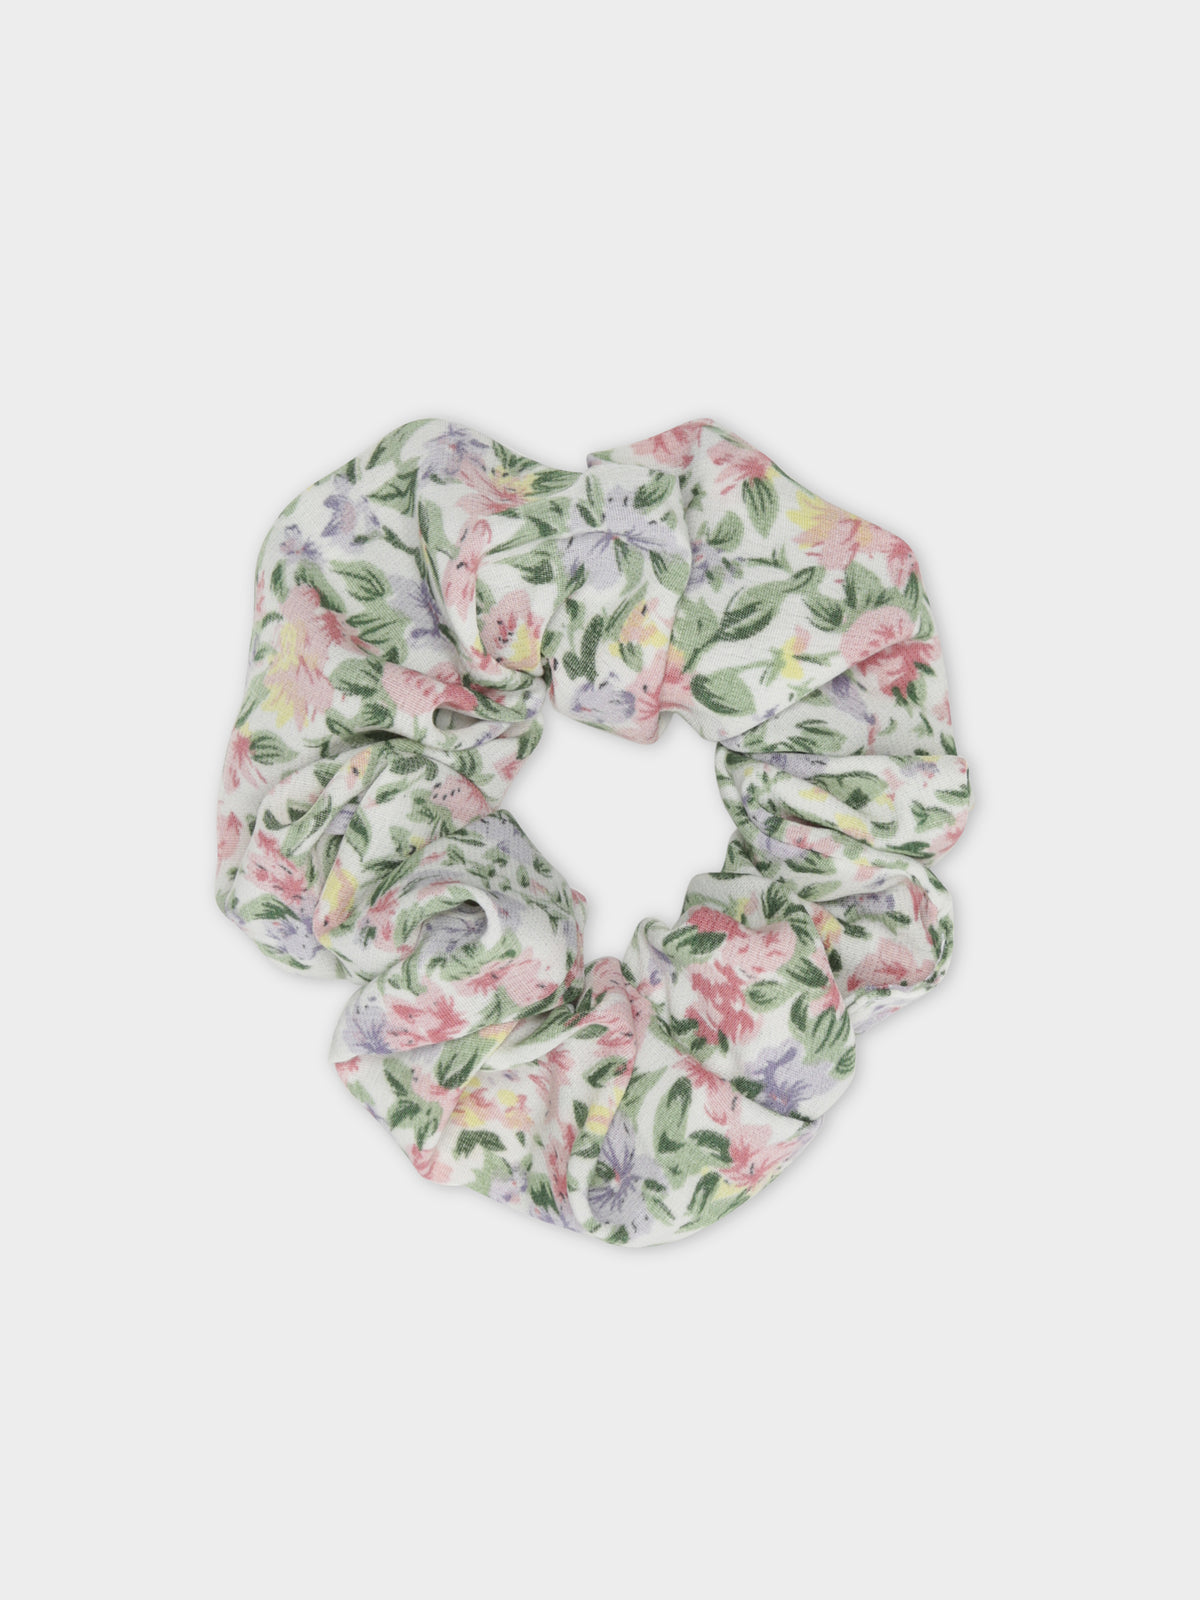 Eve Spring Scrunchie in Floral